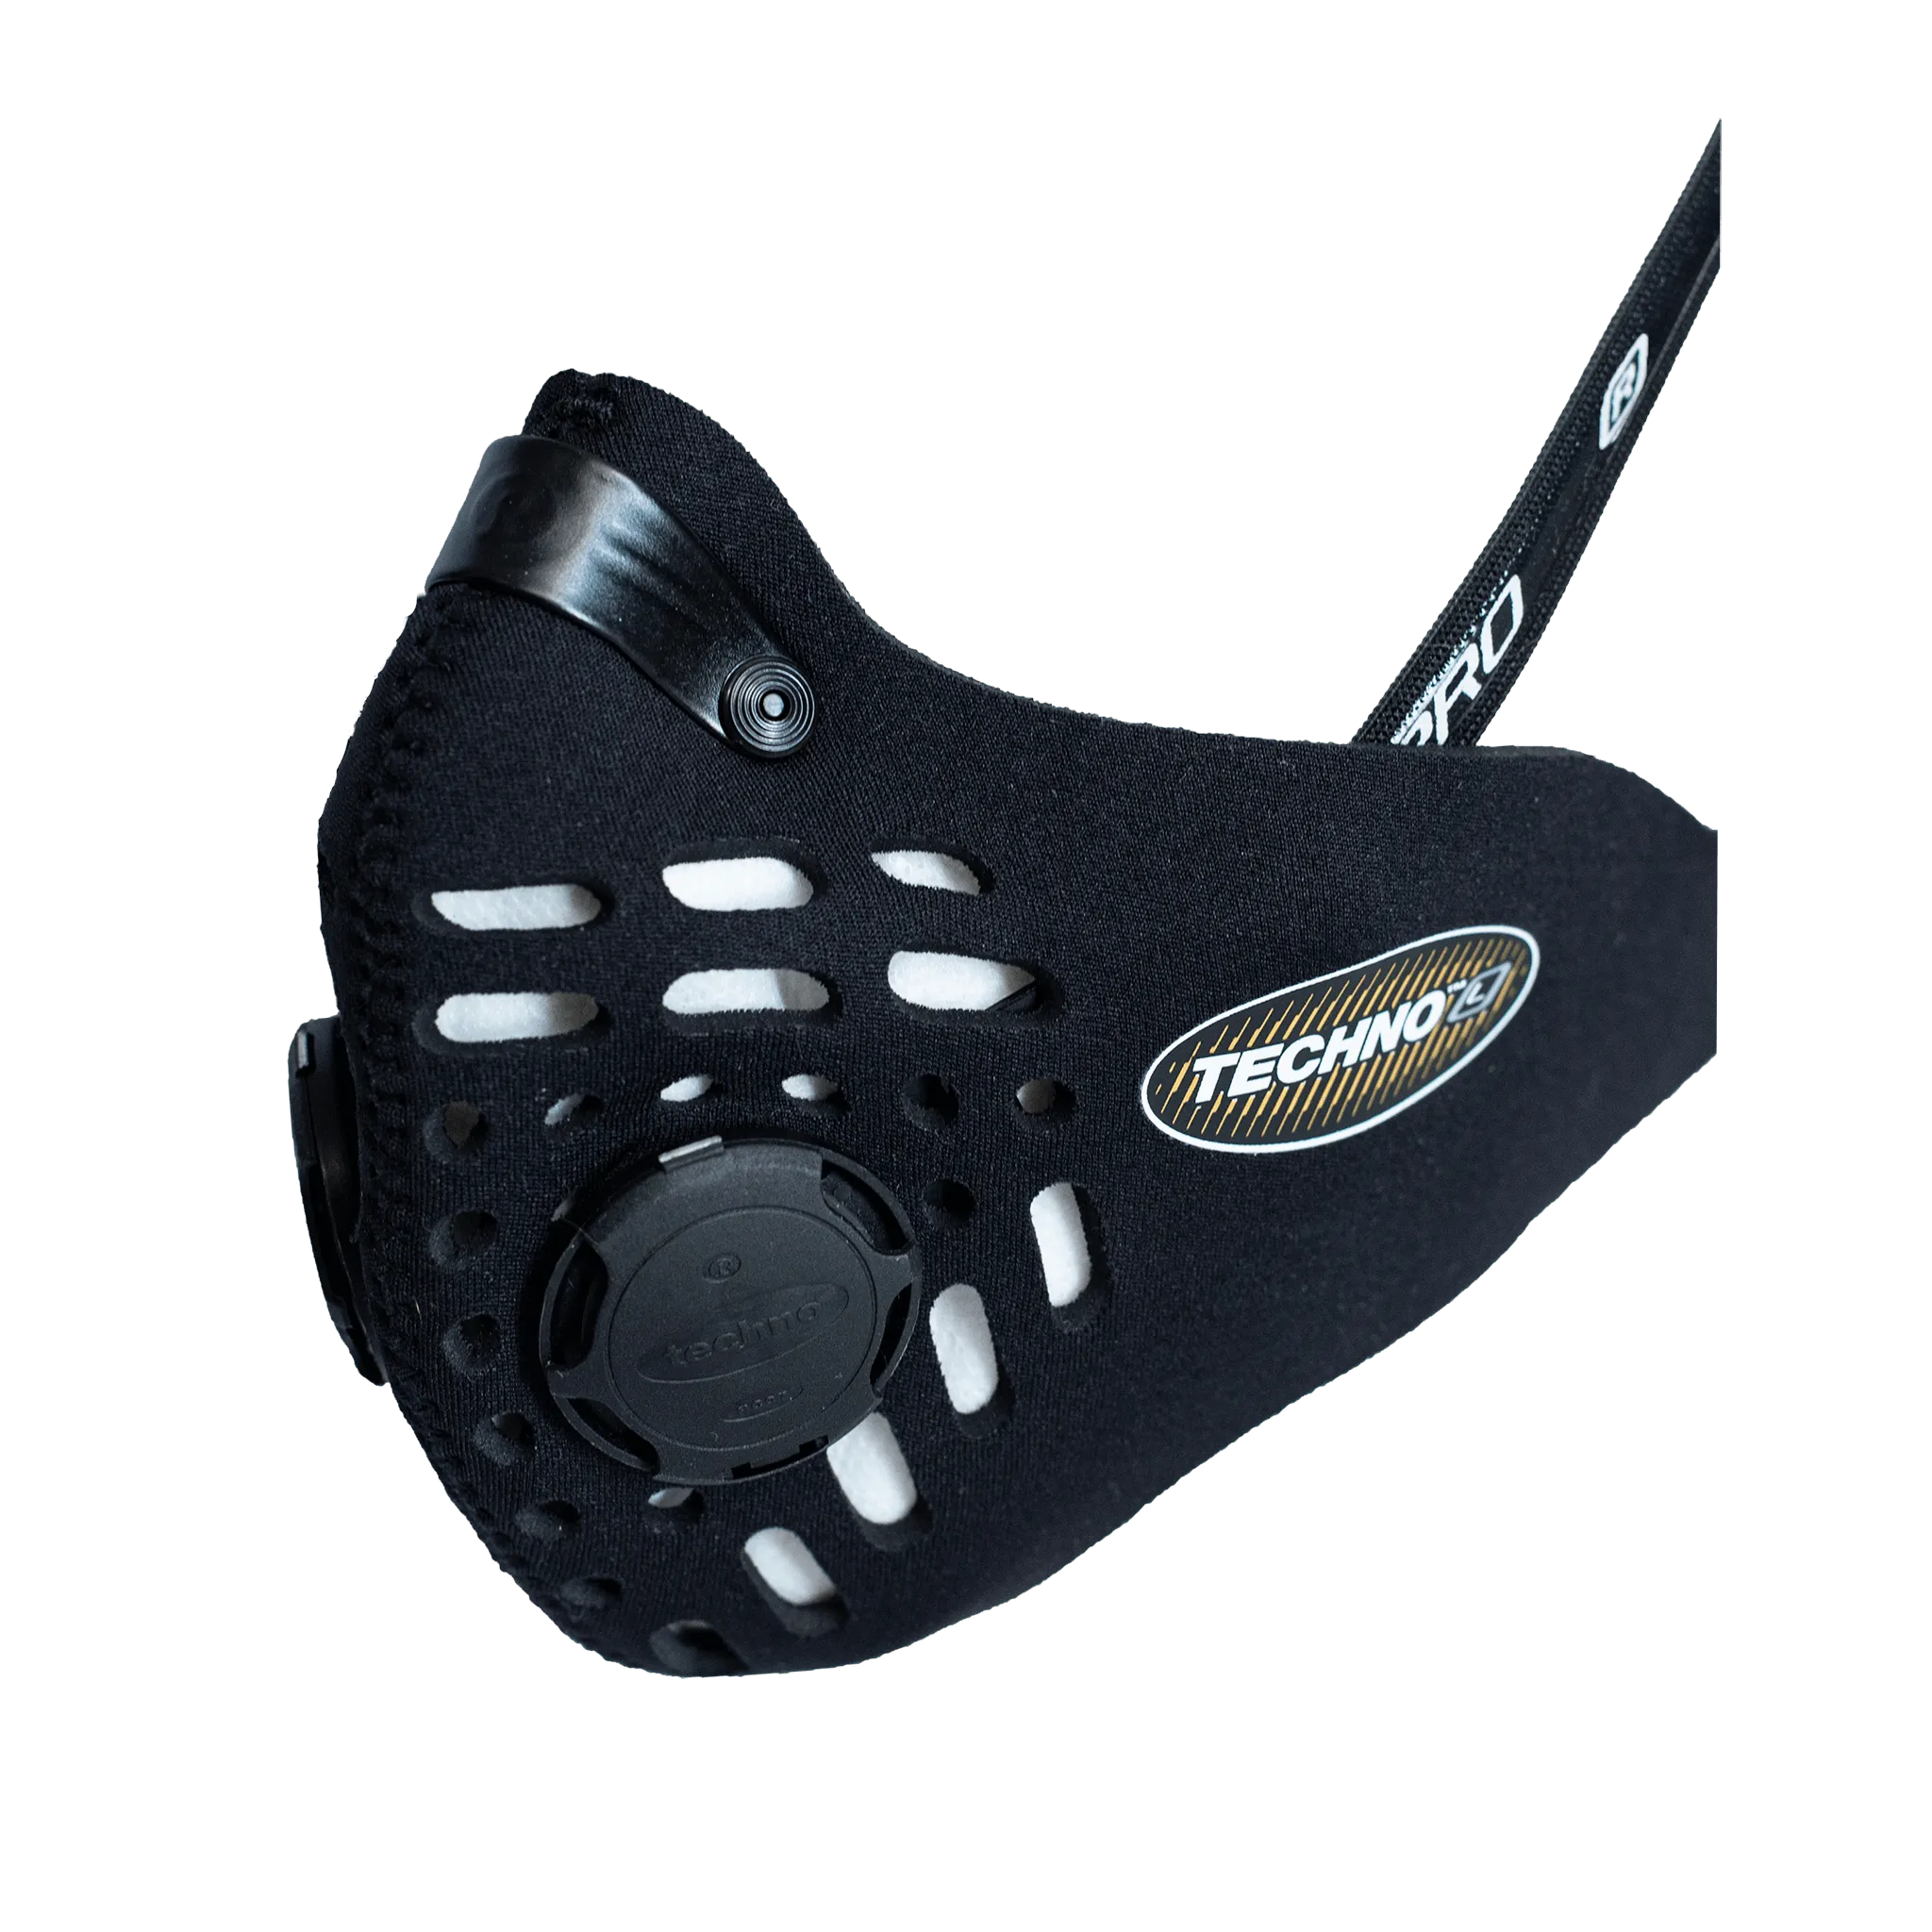 Respro CE Techno Black, maska antysmogowa, rozmiar M, 1 sztuka 